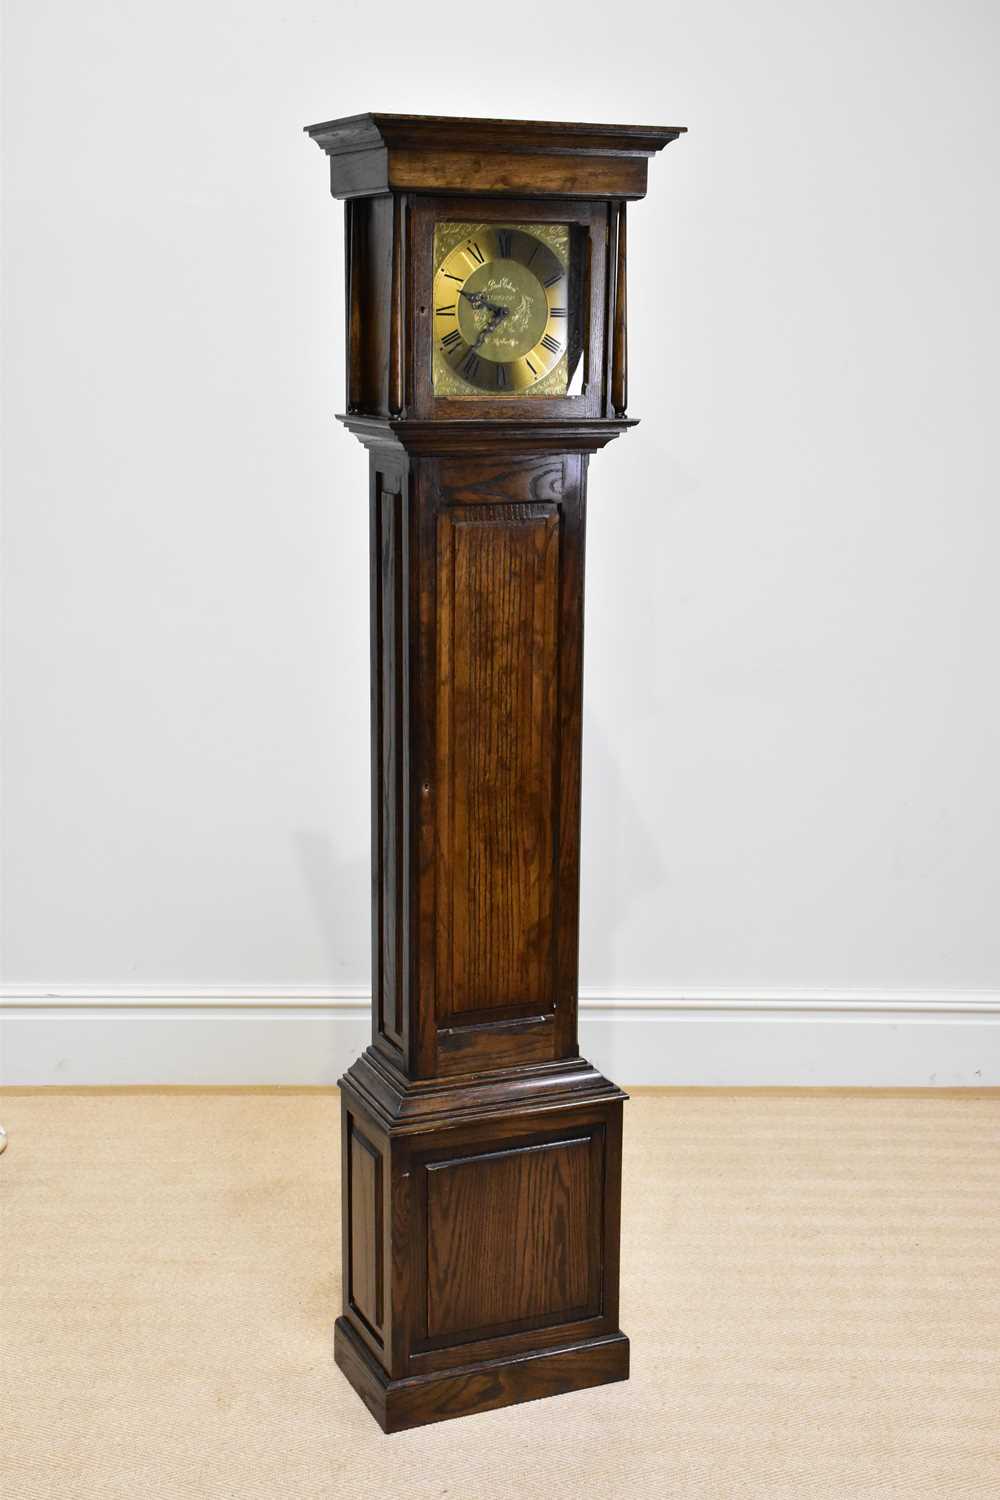 PAUL EDEN, LONGNOR; a reproduction oak longcase clock of small proportions, height 188cm.